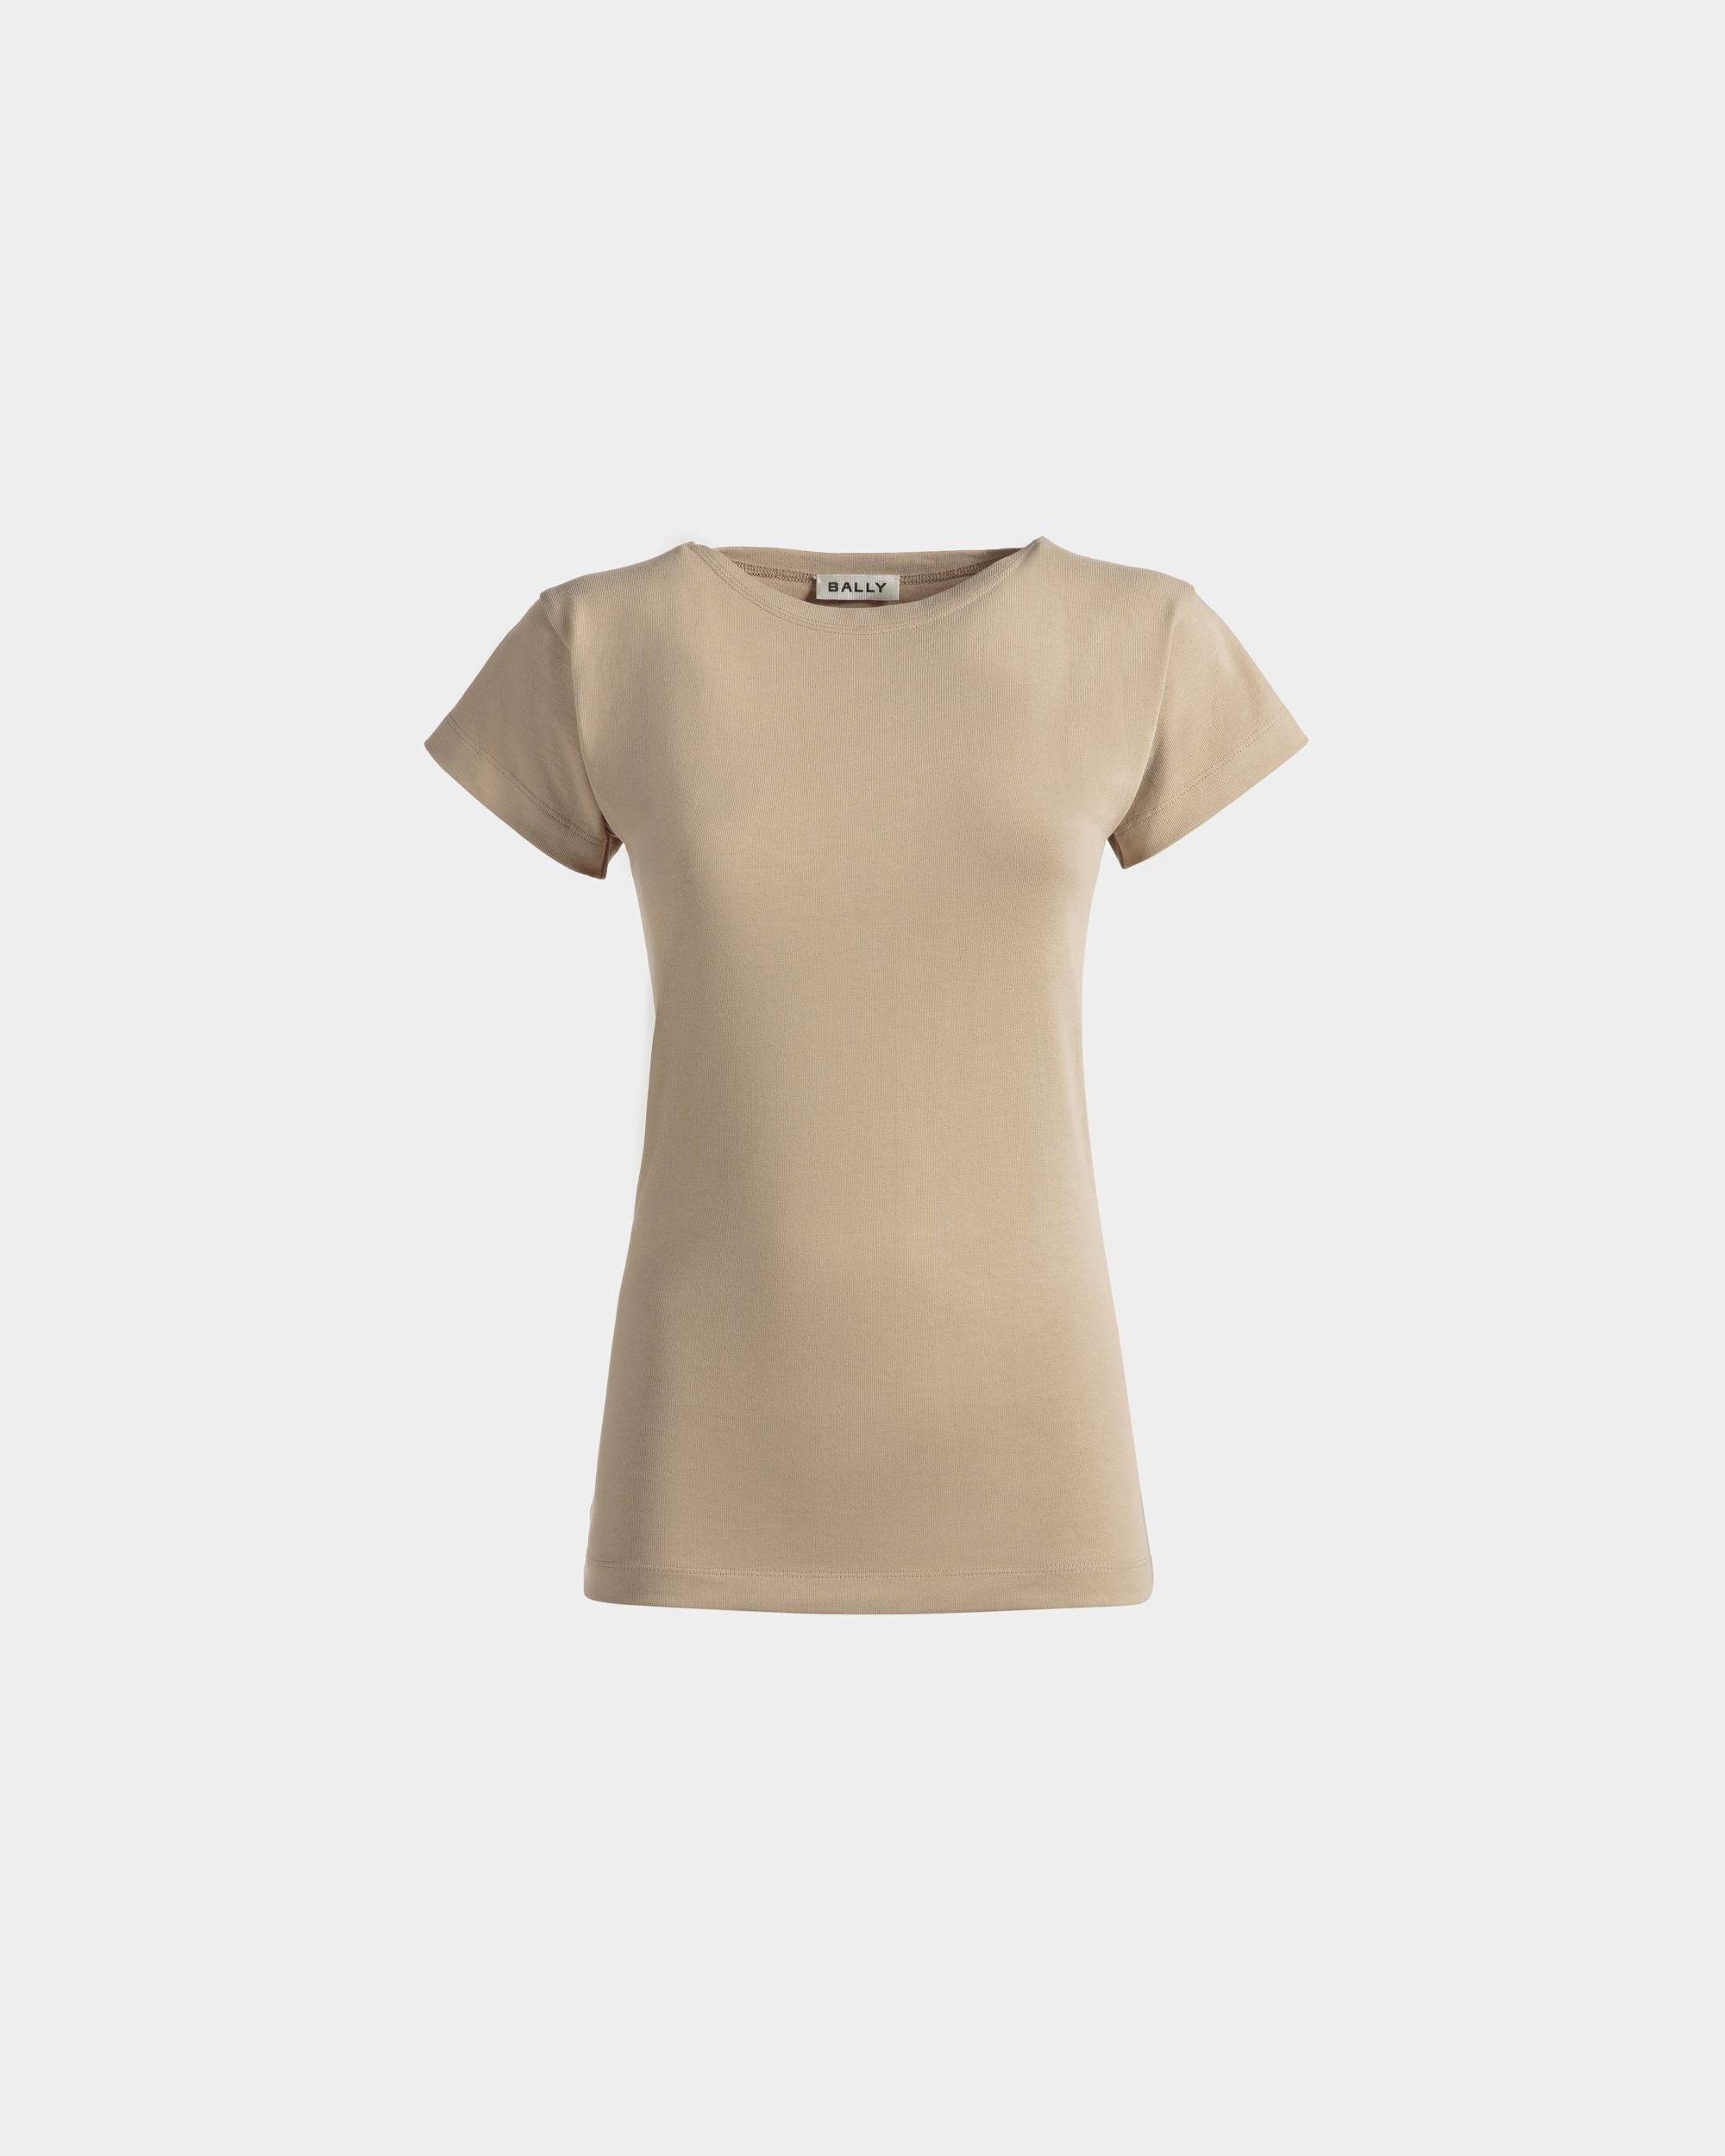 Women's T-Shirt in Beige Cotton | Bally | Still Life Front